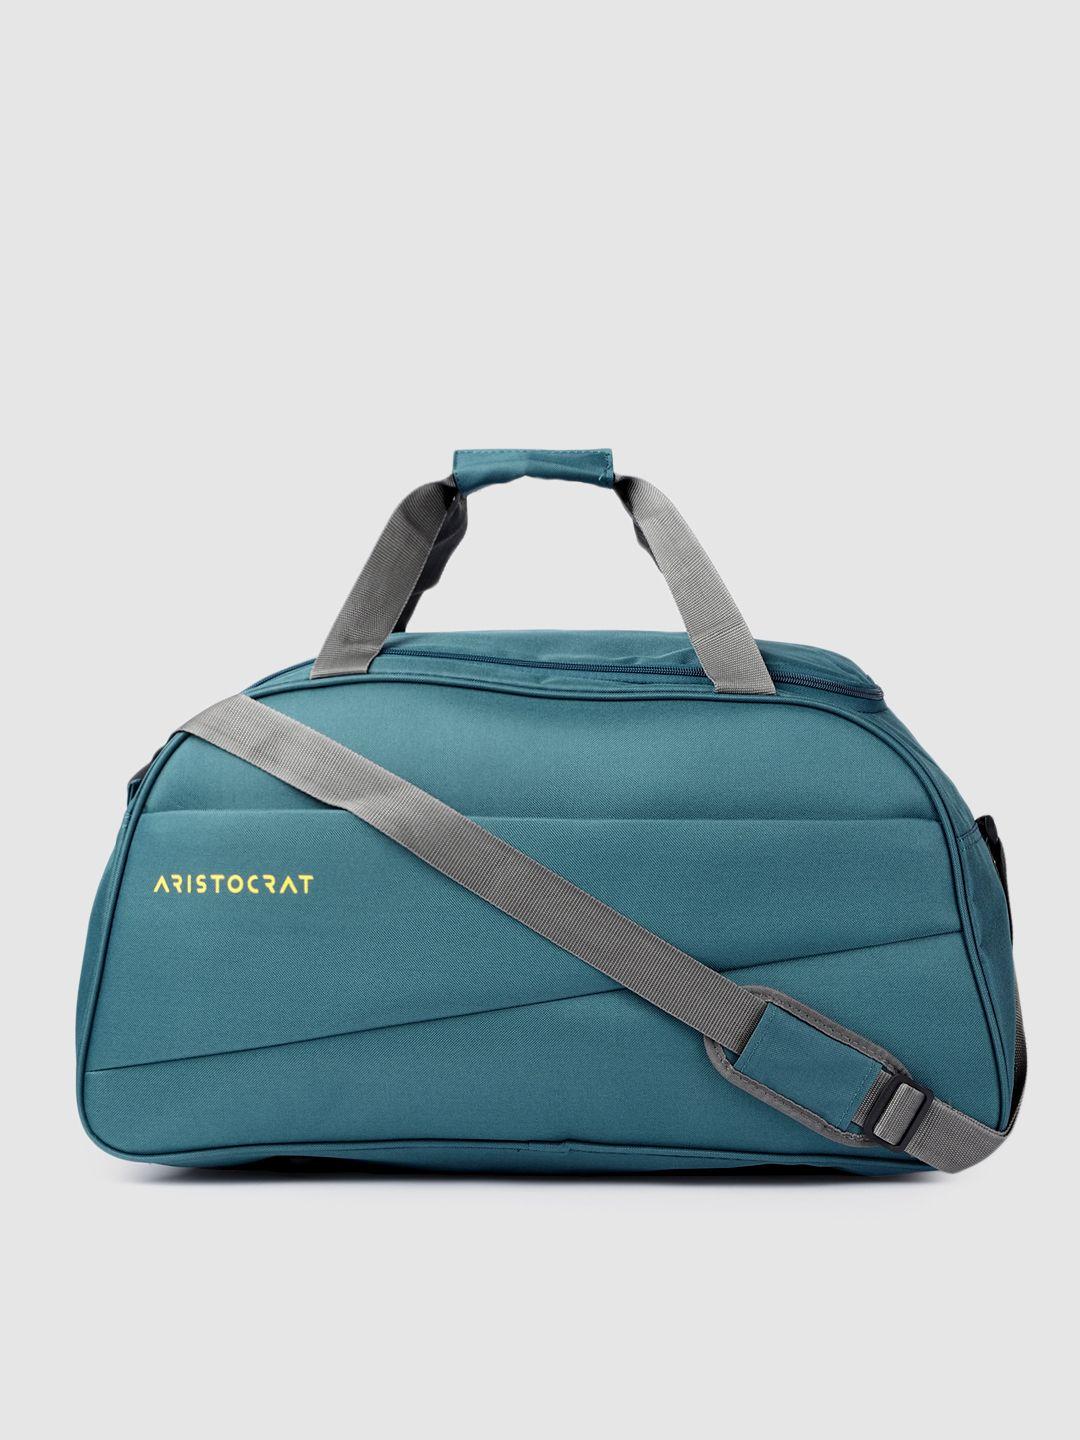 aristocrat-teal-blue-solid-large-duffel-bag